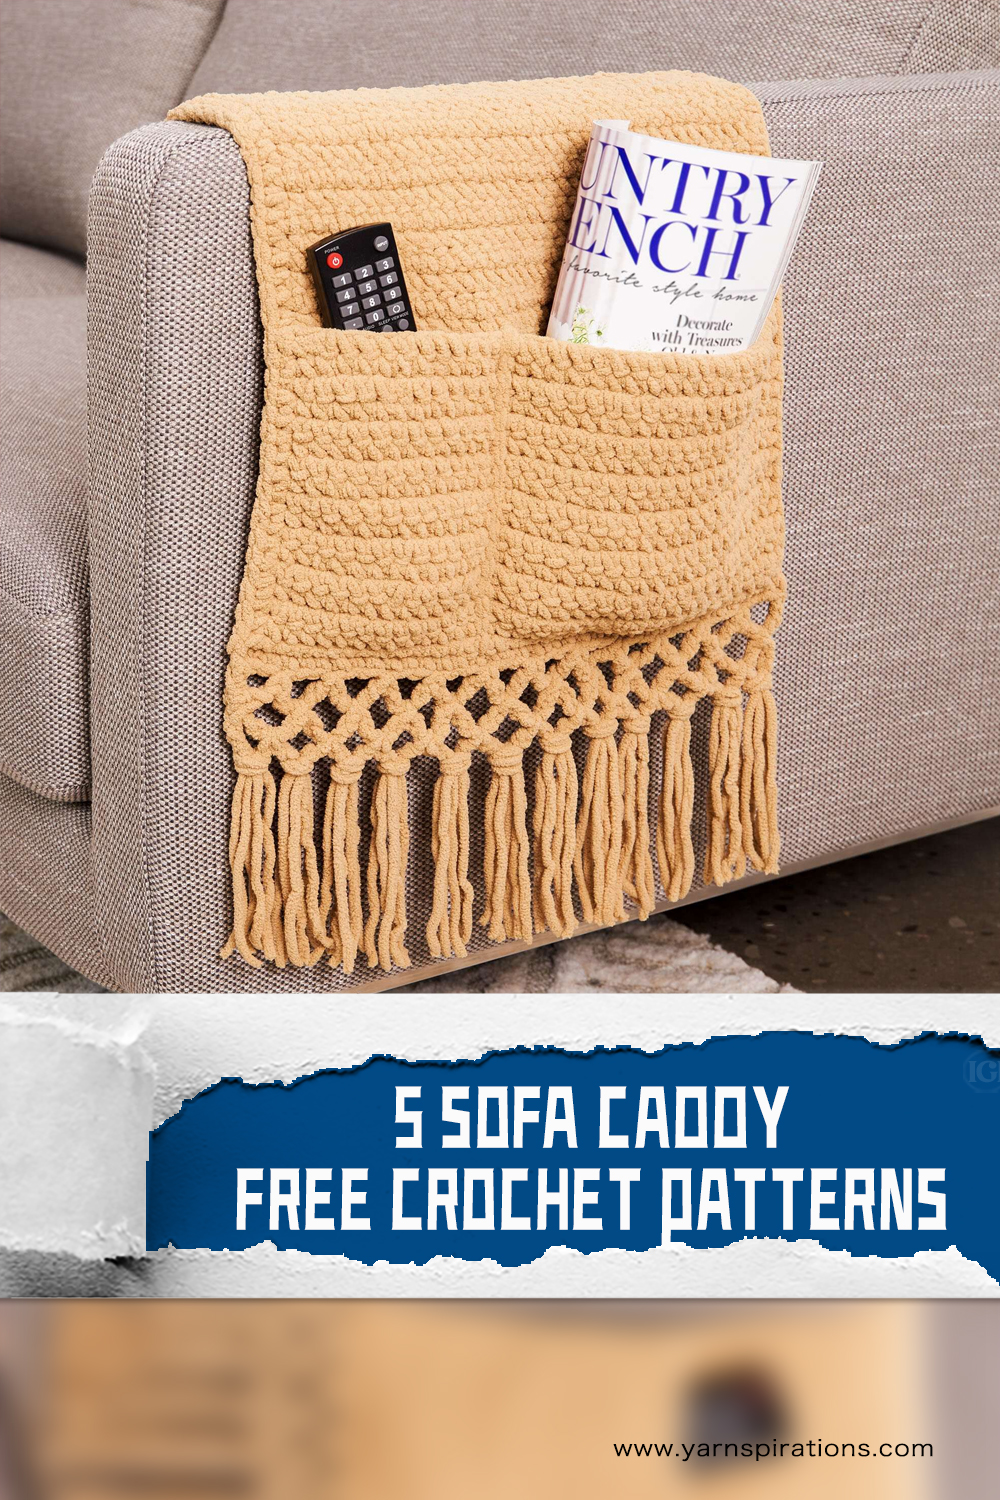 5 FREE Sofa Caddy​ Crochet Patterns